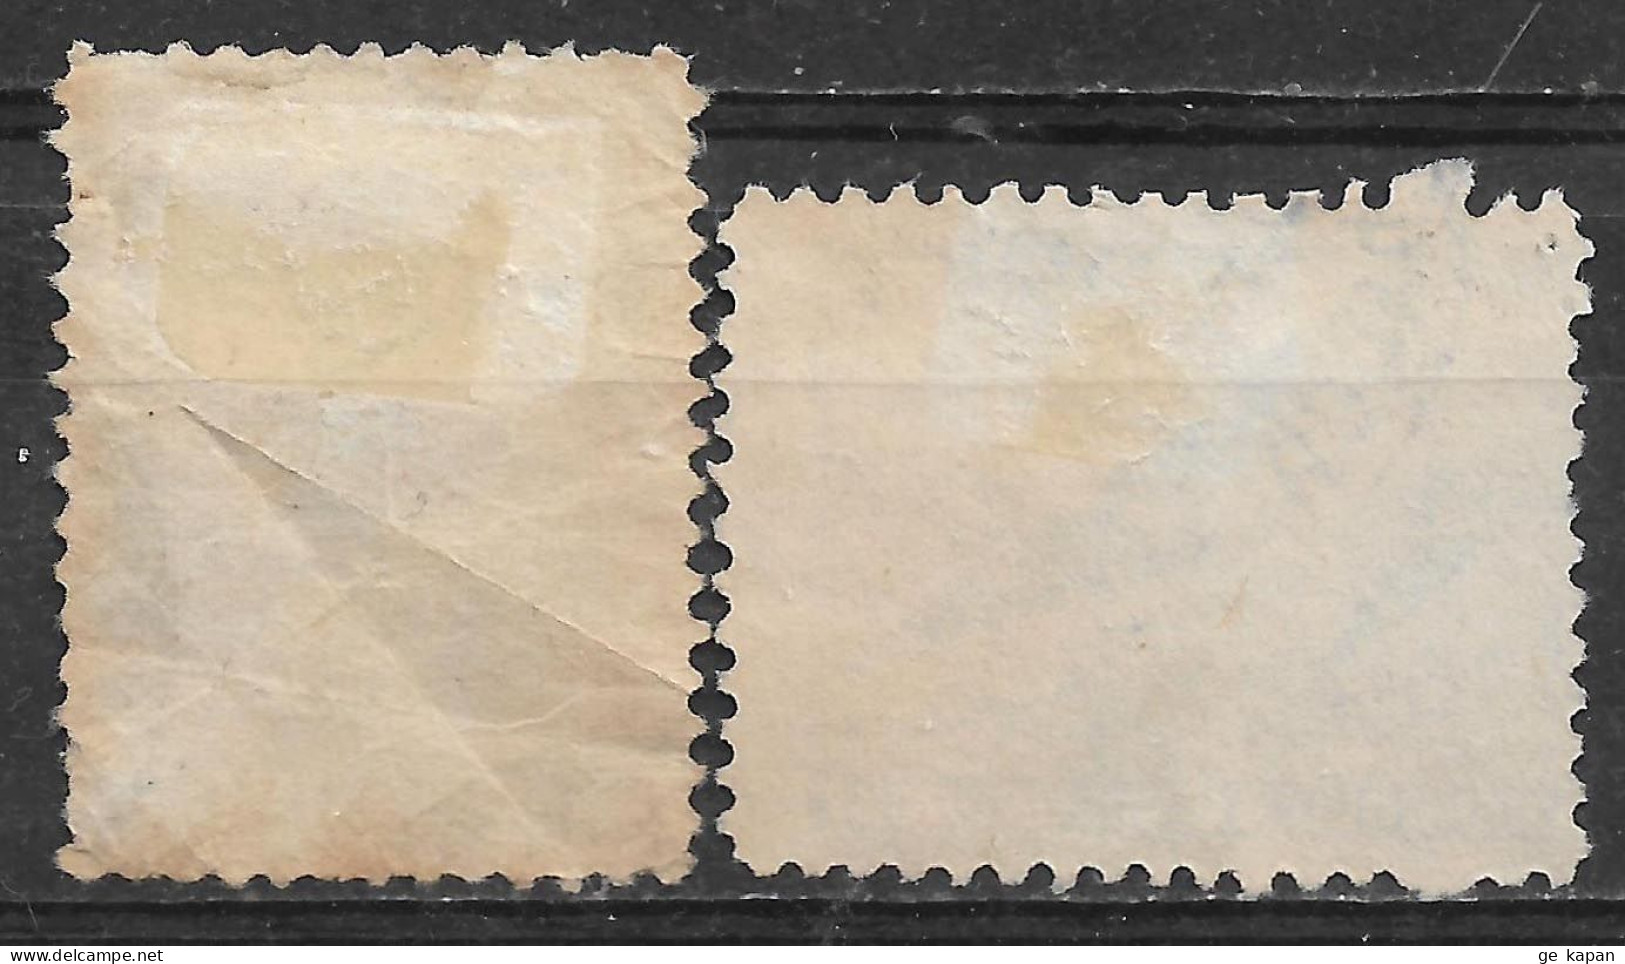 1922,1952 URUGUAY Set Of 2 Used Stamps (Scott # 239,C152) - Uruguay